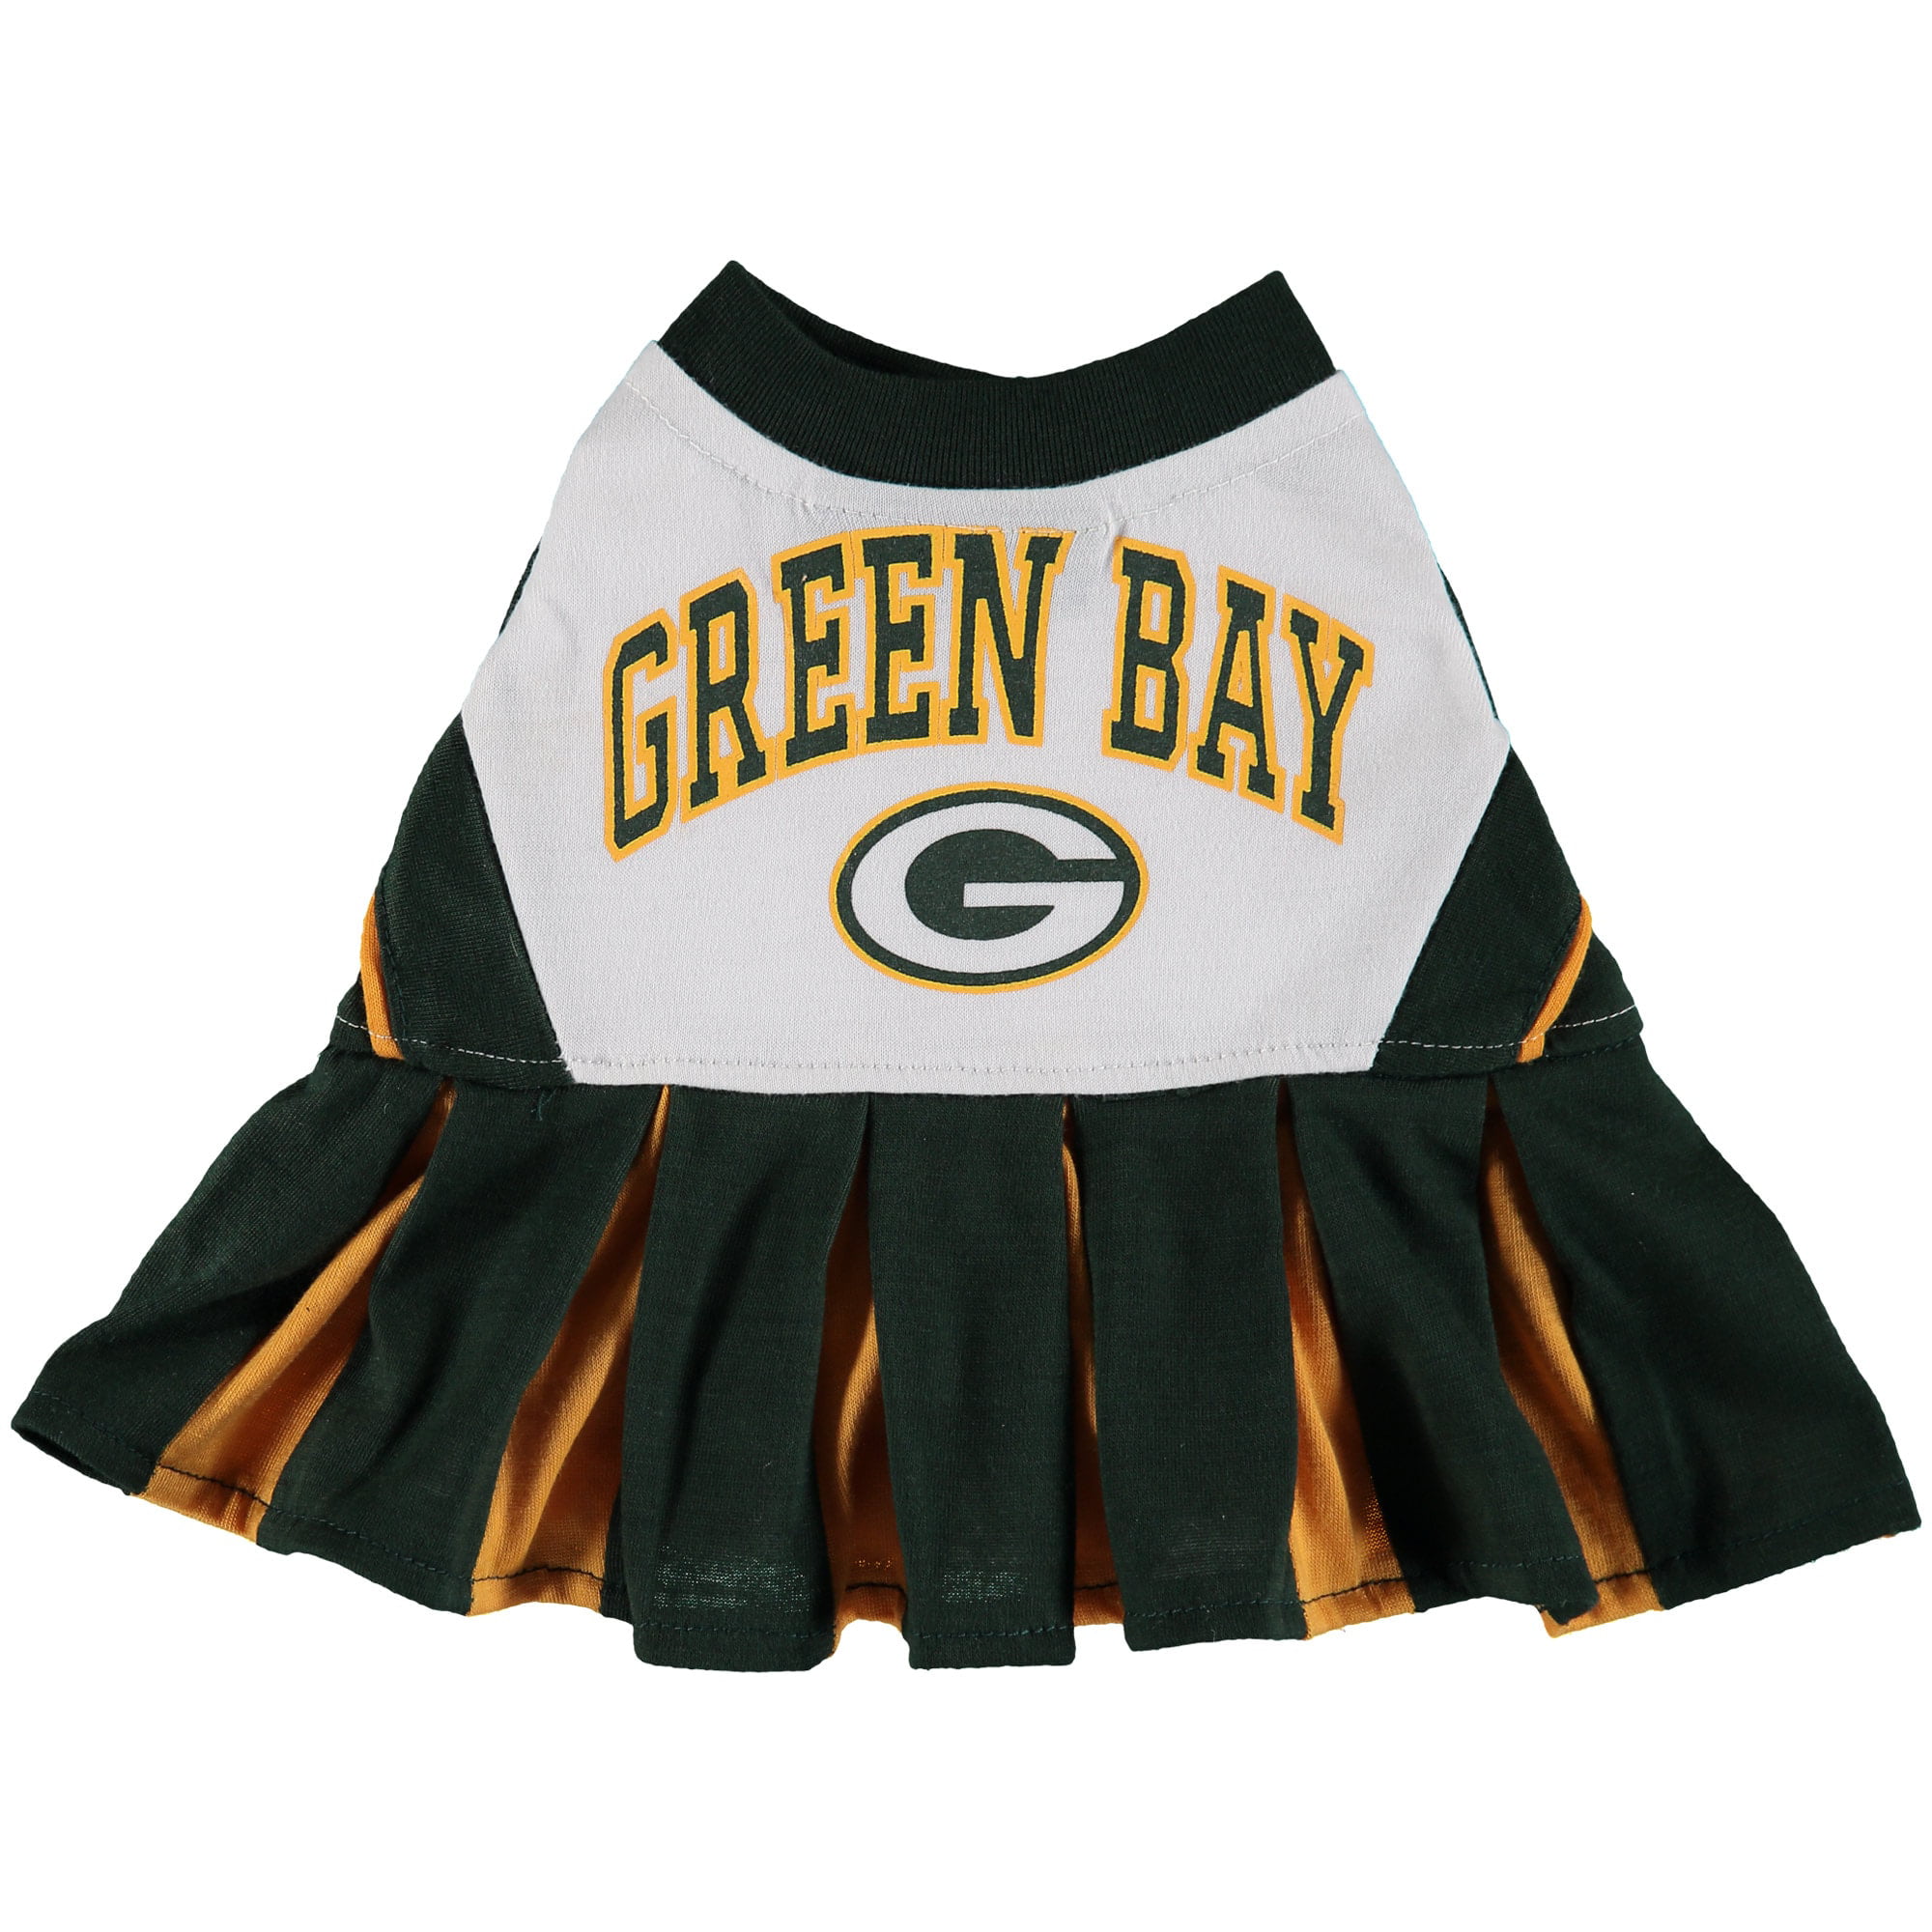 green bay cheerleader costume